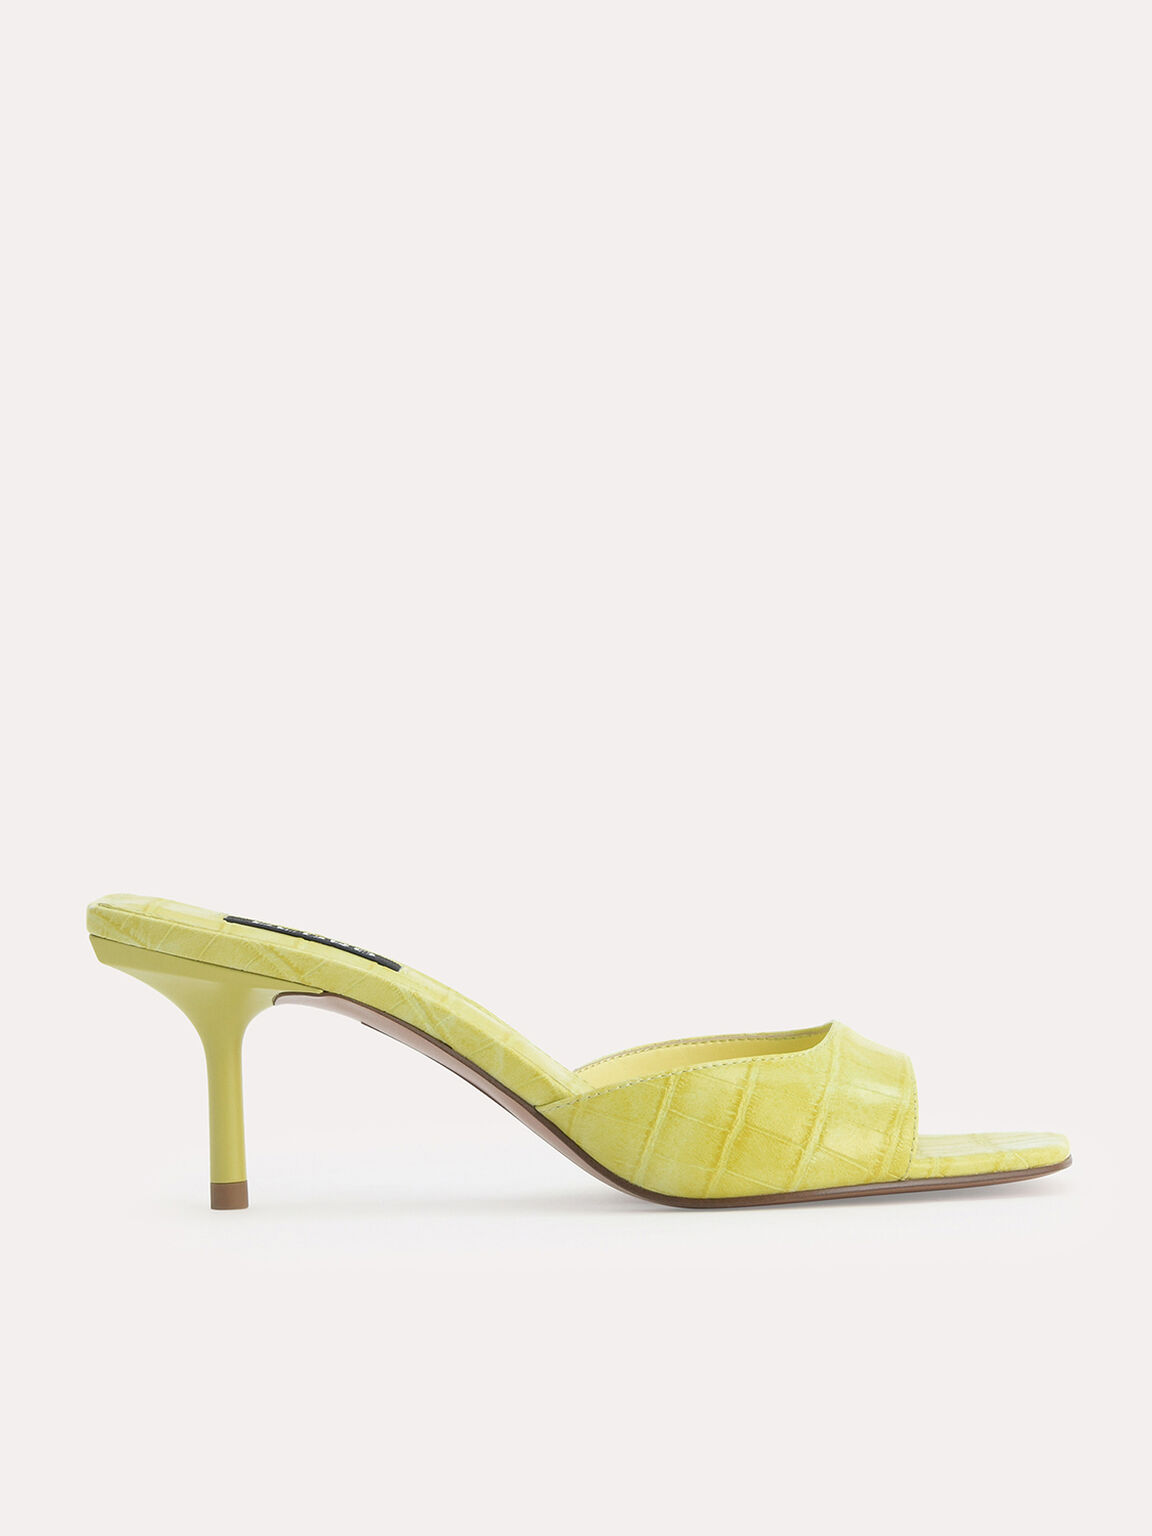 Croc-Effect Heeled Sandals, Yellow, hi-res